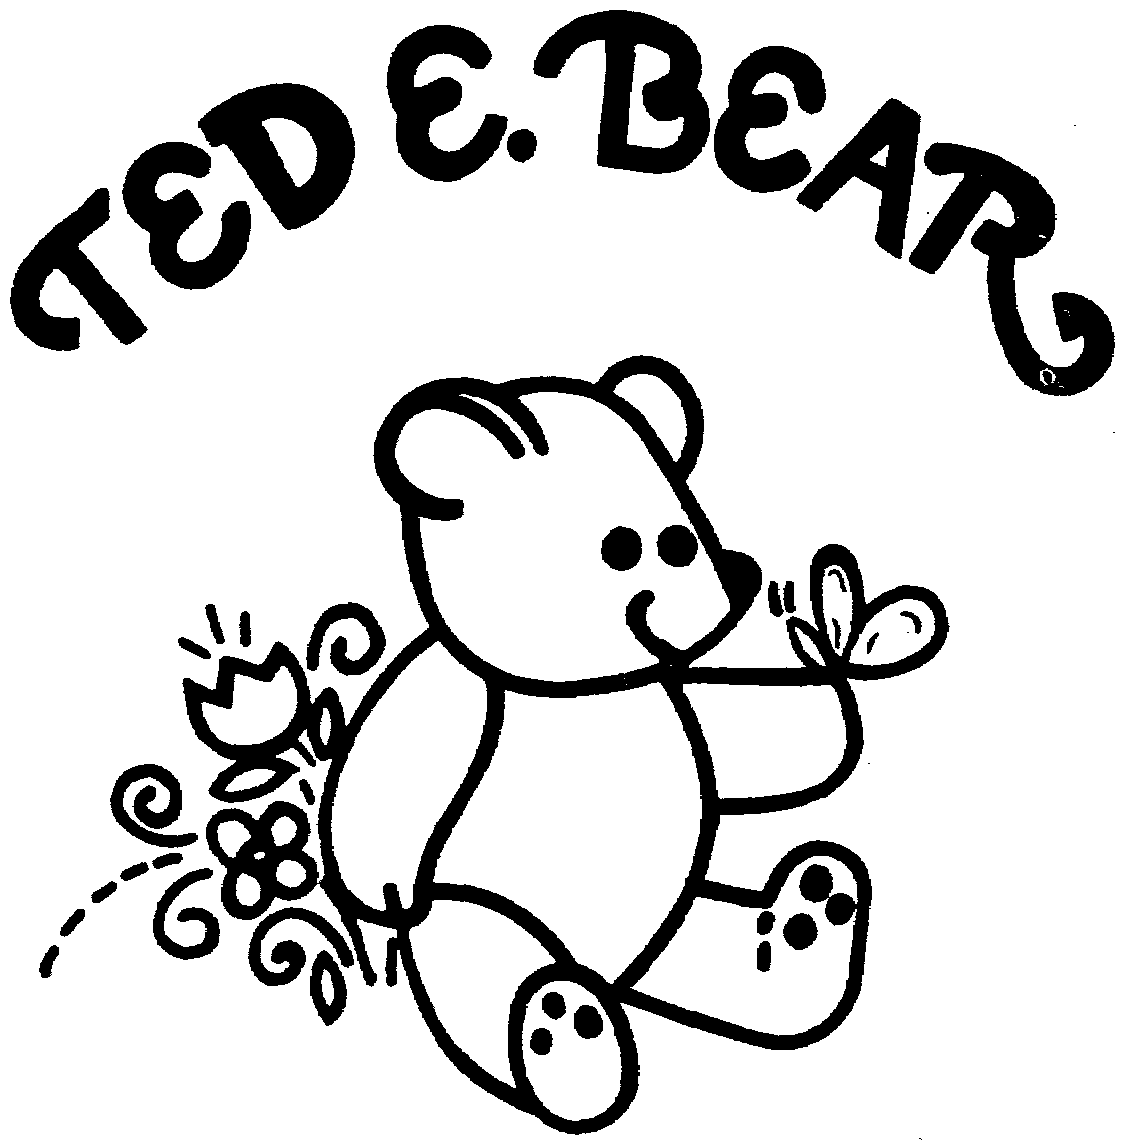  TED E. BEAR